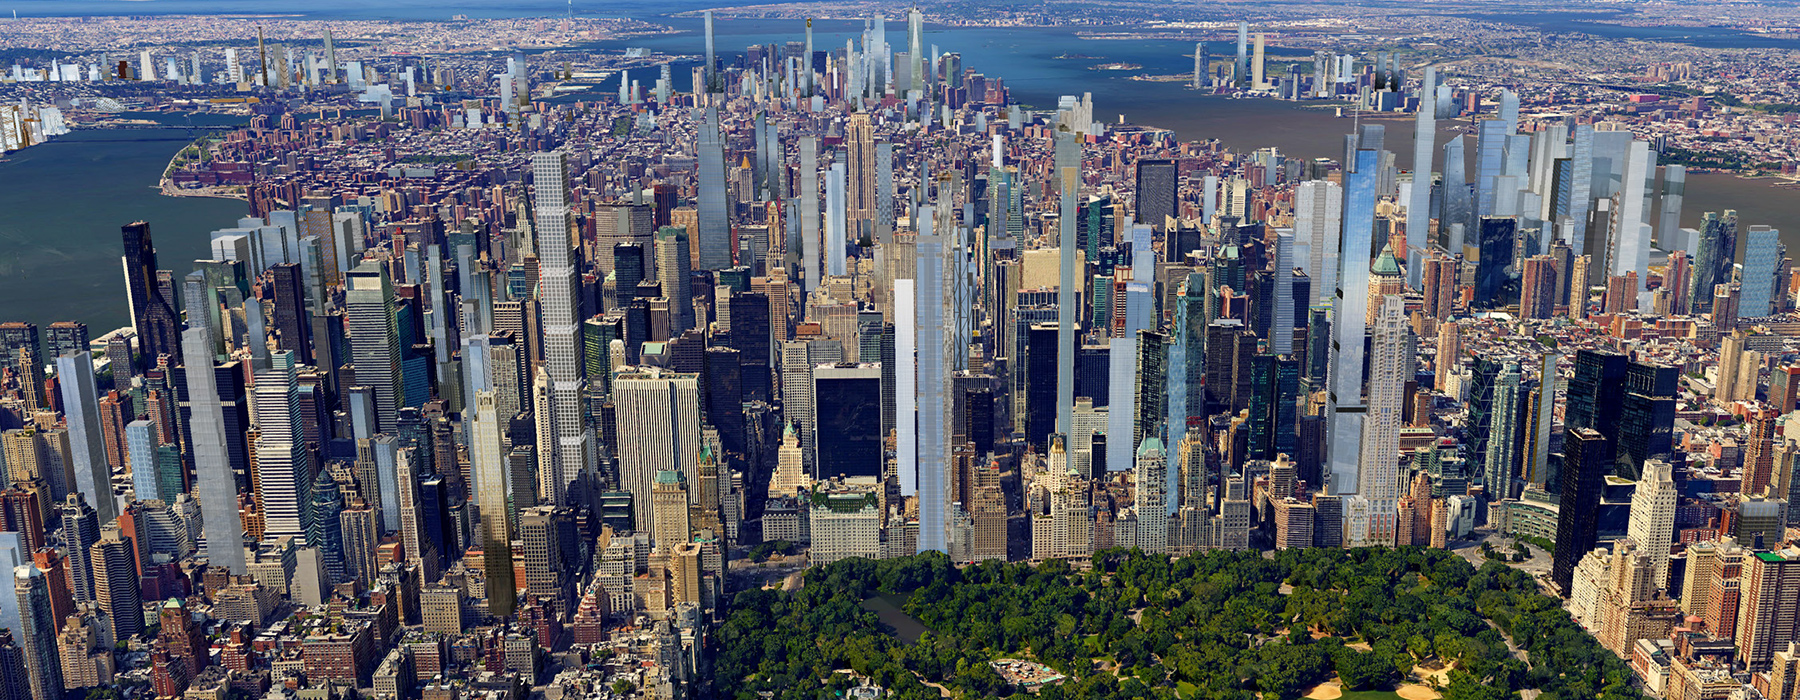 CityRealty-new-york-manhattan-skyline-2020-future-projects-designboom-1800.jpg